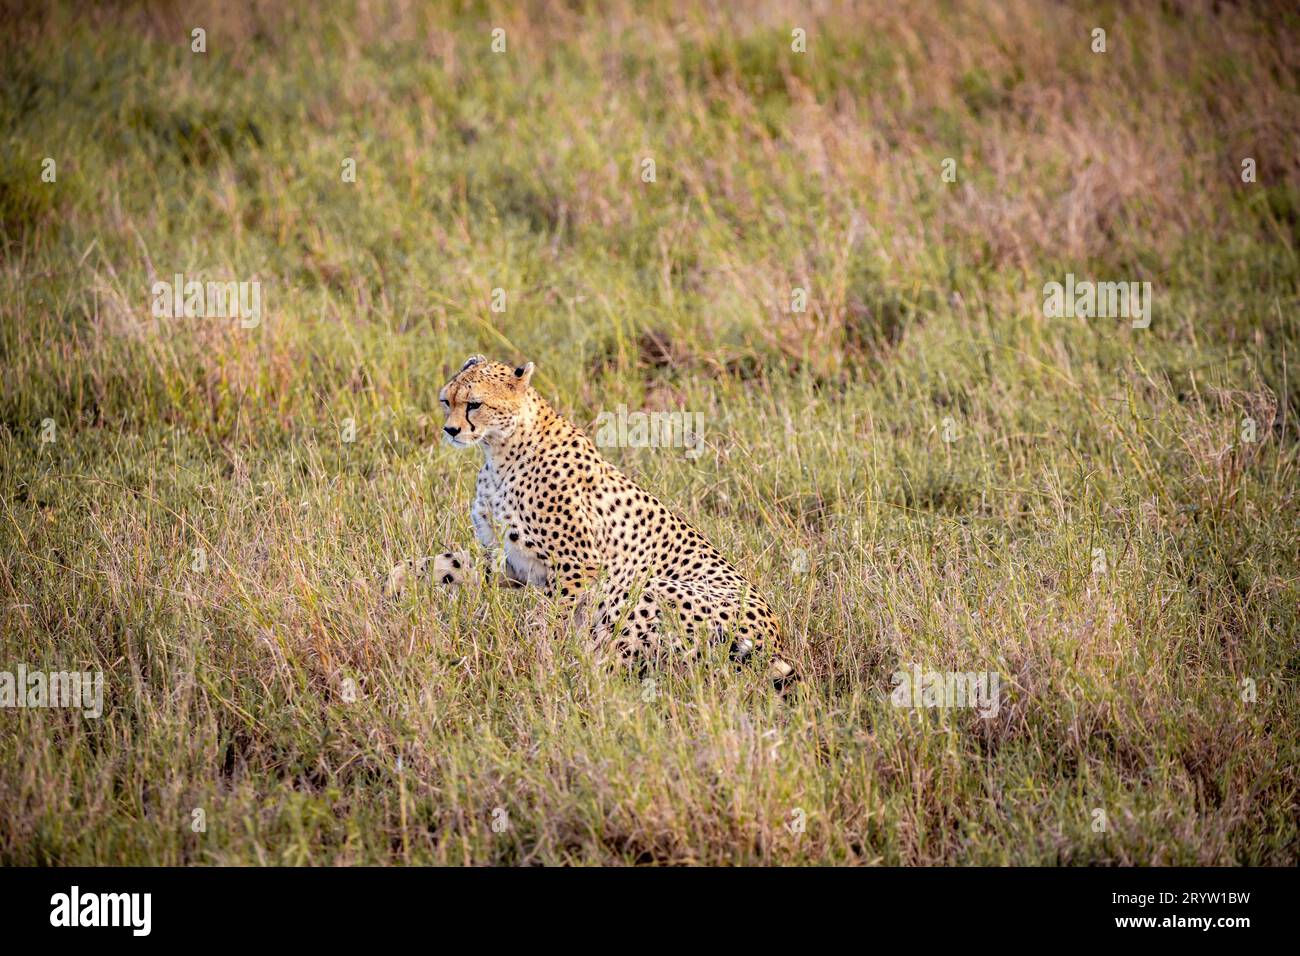 Cheetah in the savannah. Taita Hills in Kenya,Africa,Big cat at sunrise in the wild. Stock Photo